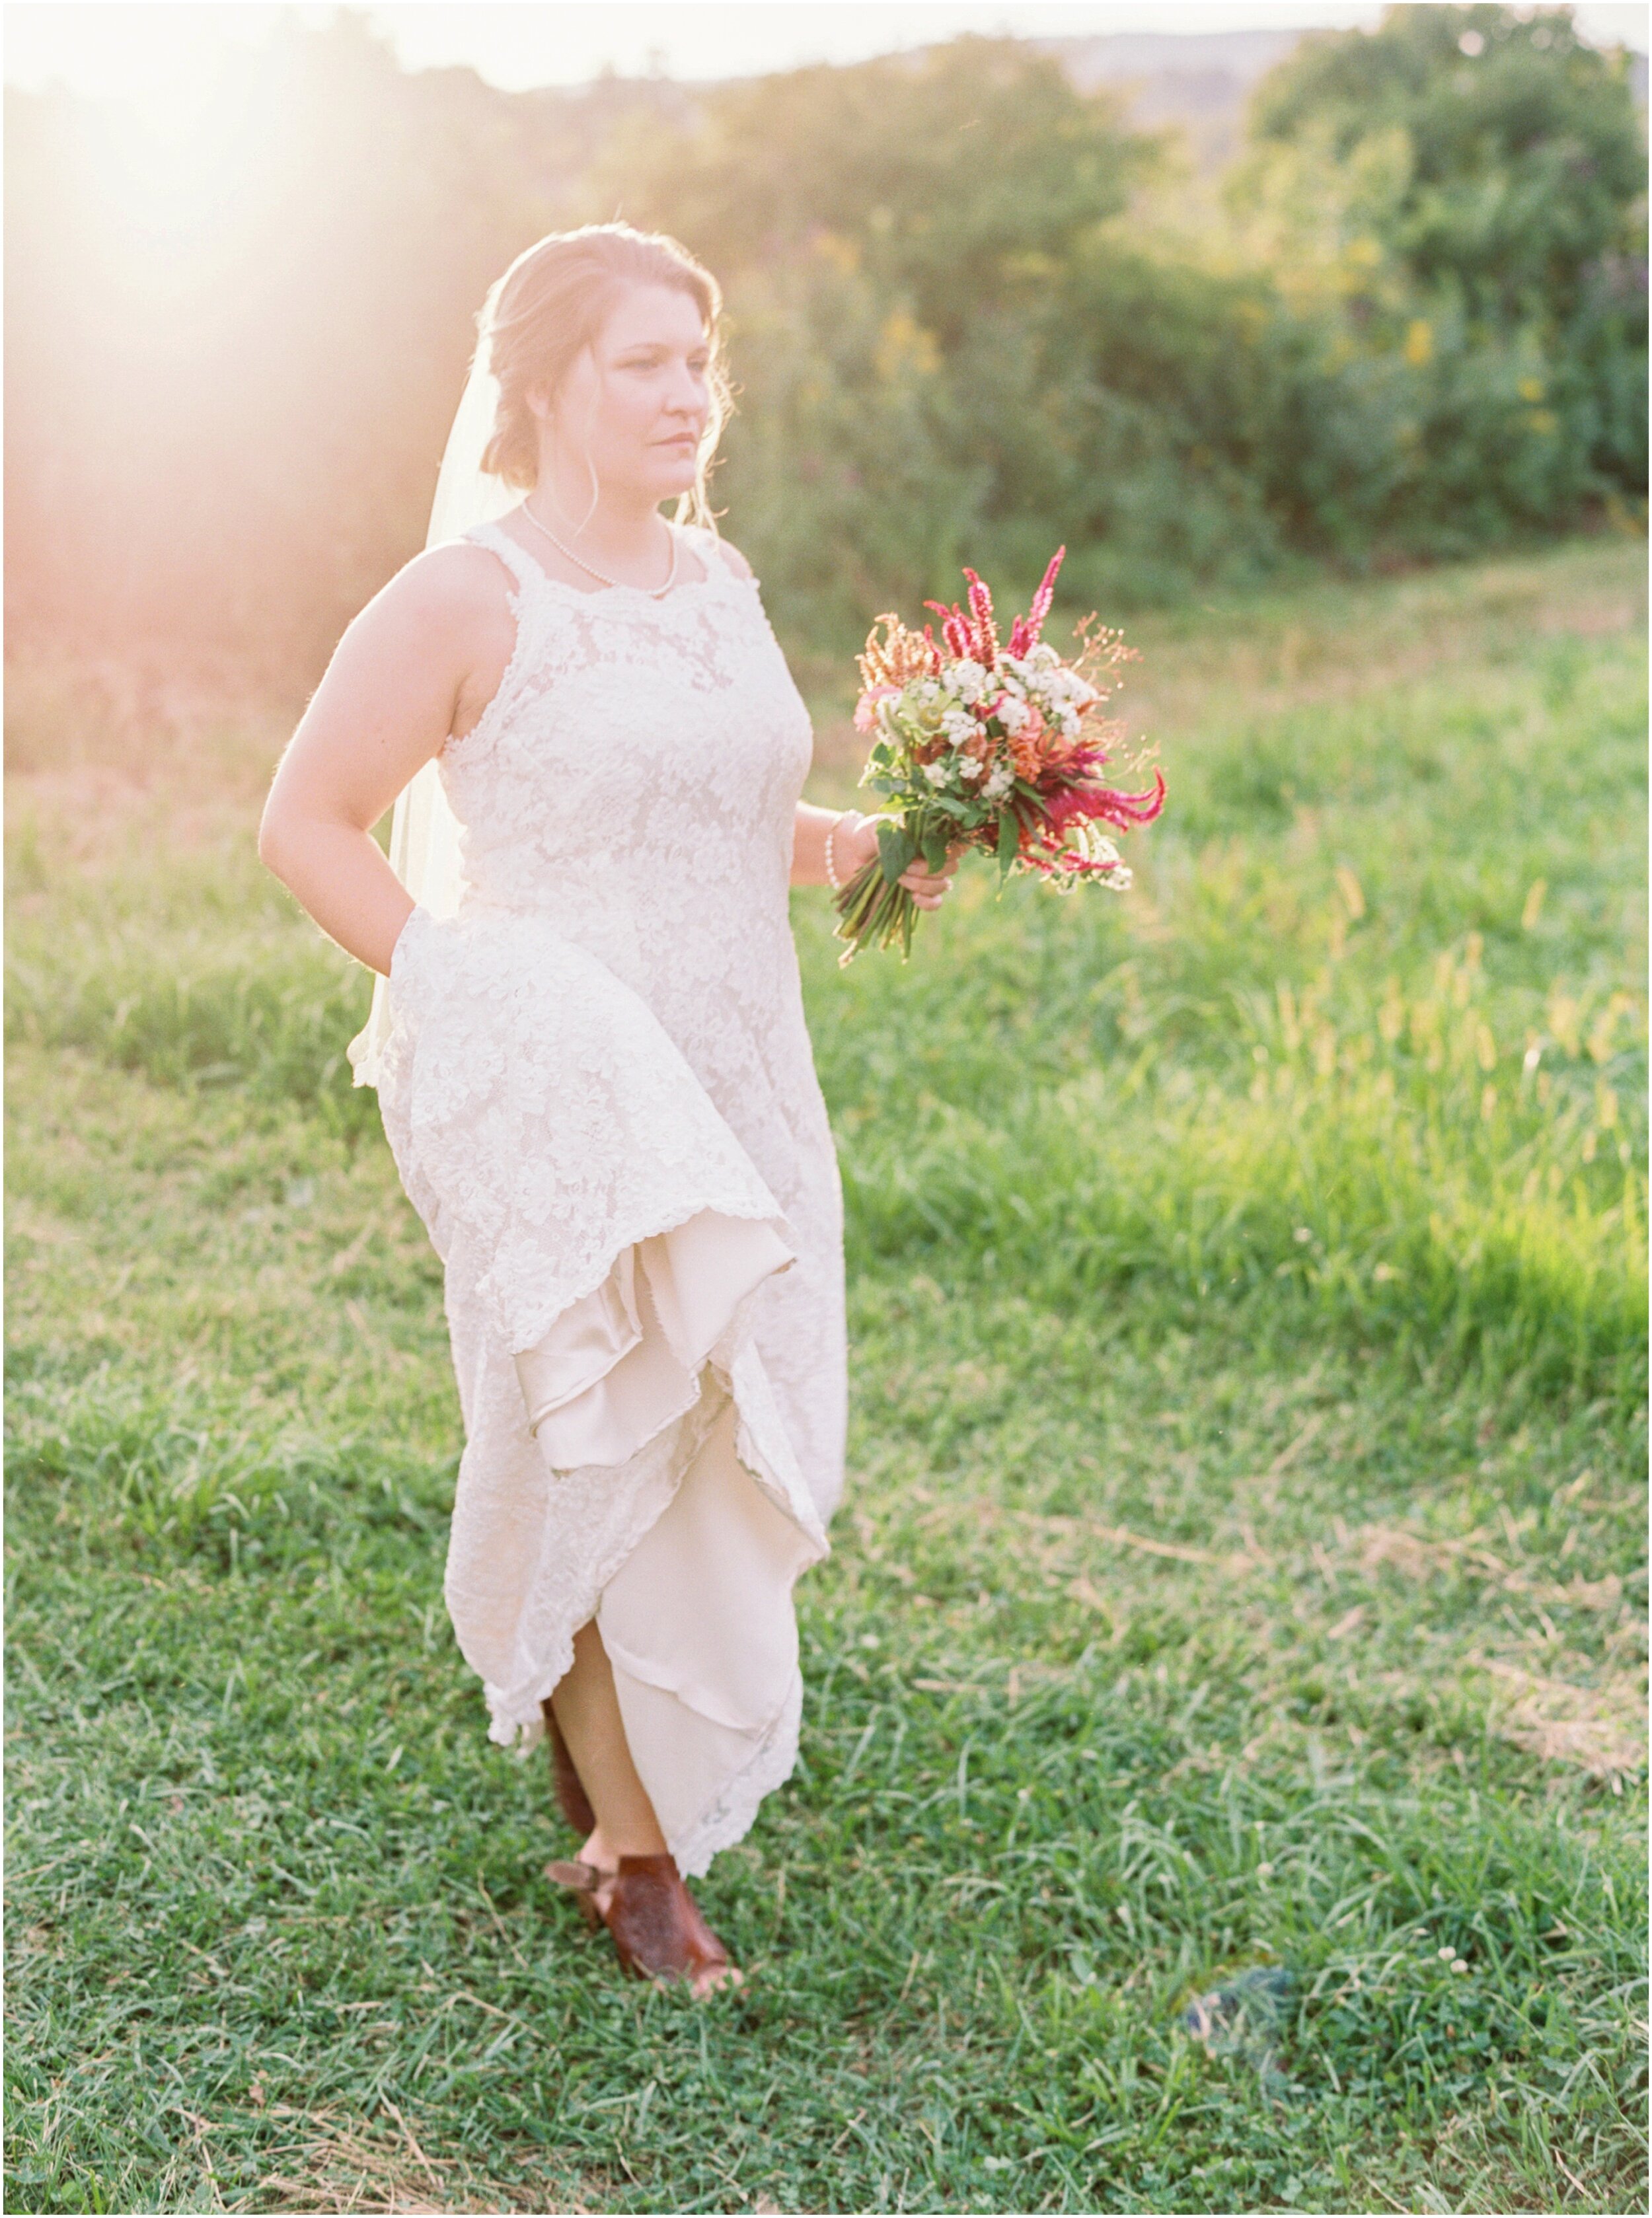 Hannah-Virginia-Rustic-Elegant-River-Bridal-Portraits_0019.jpg